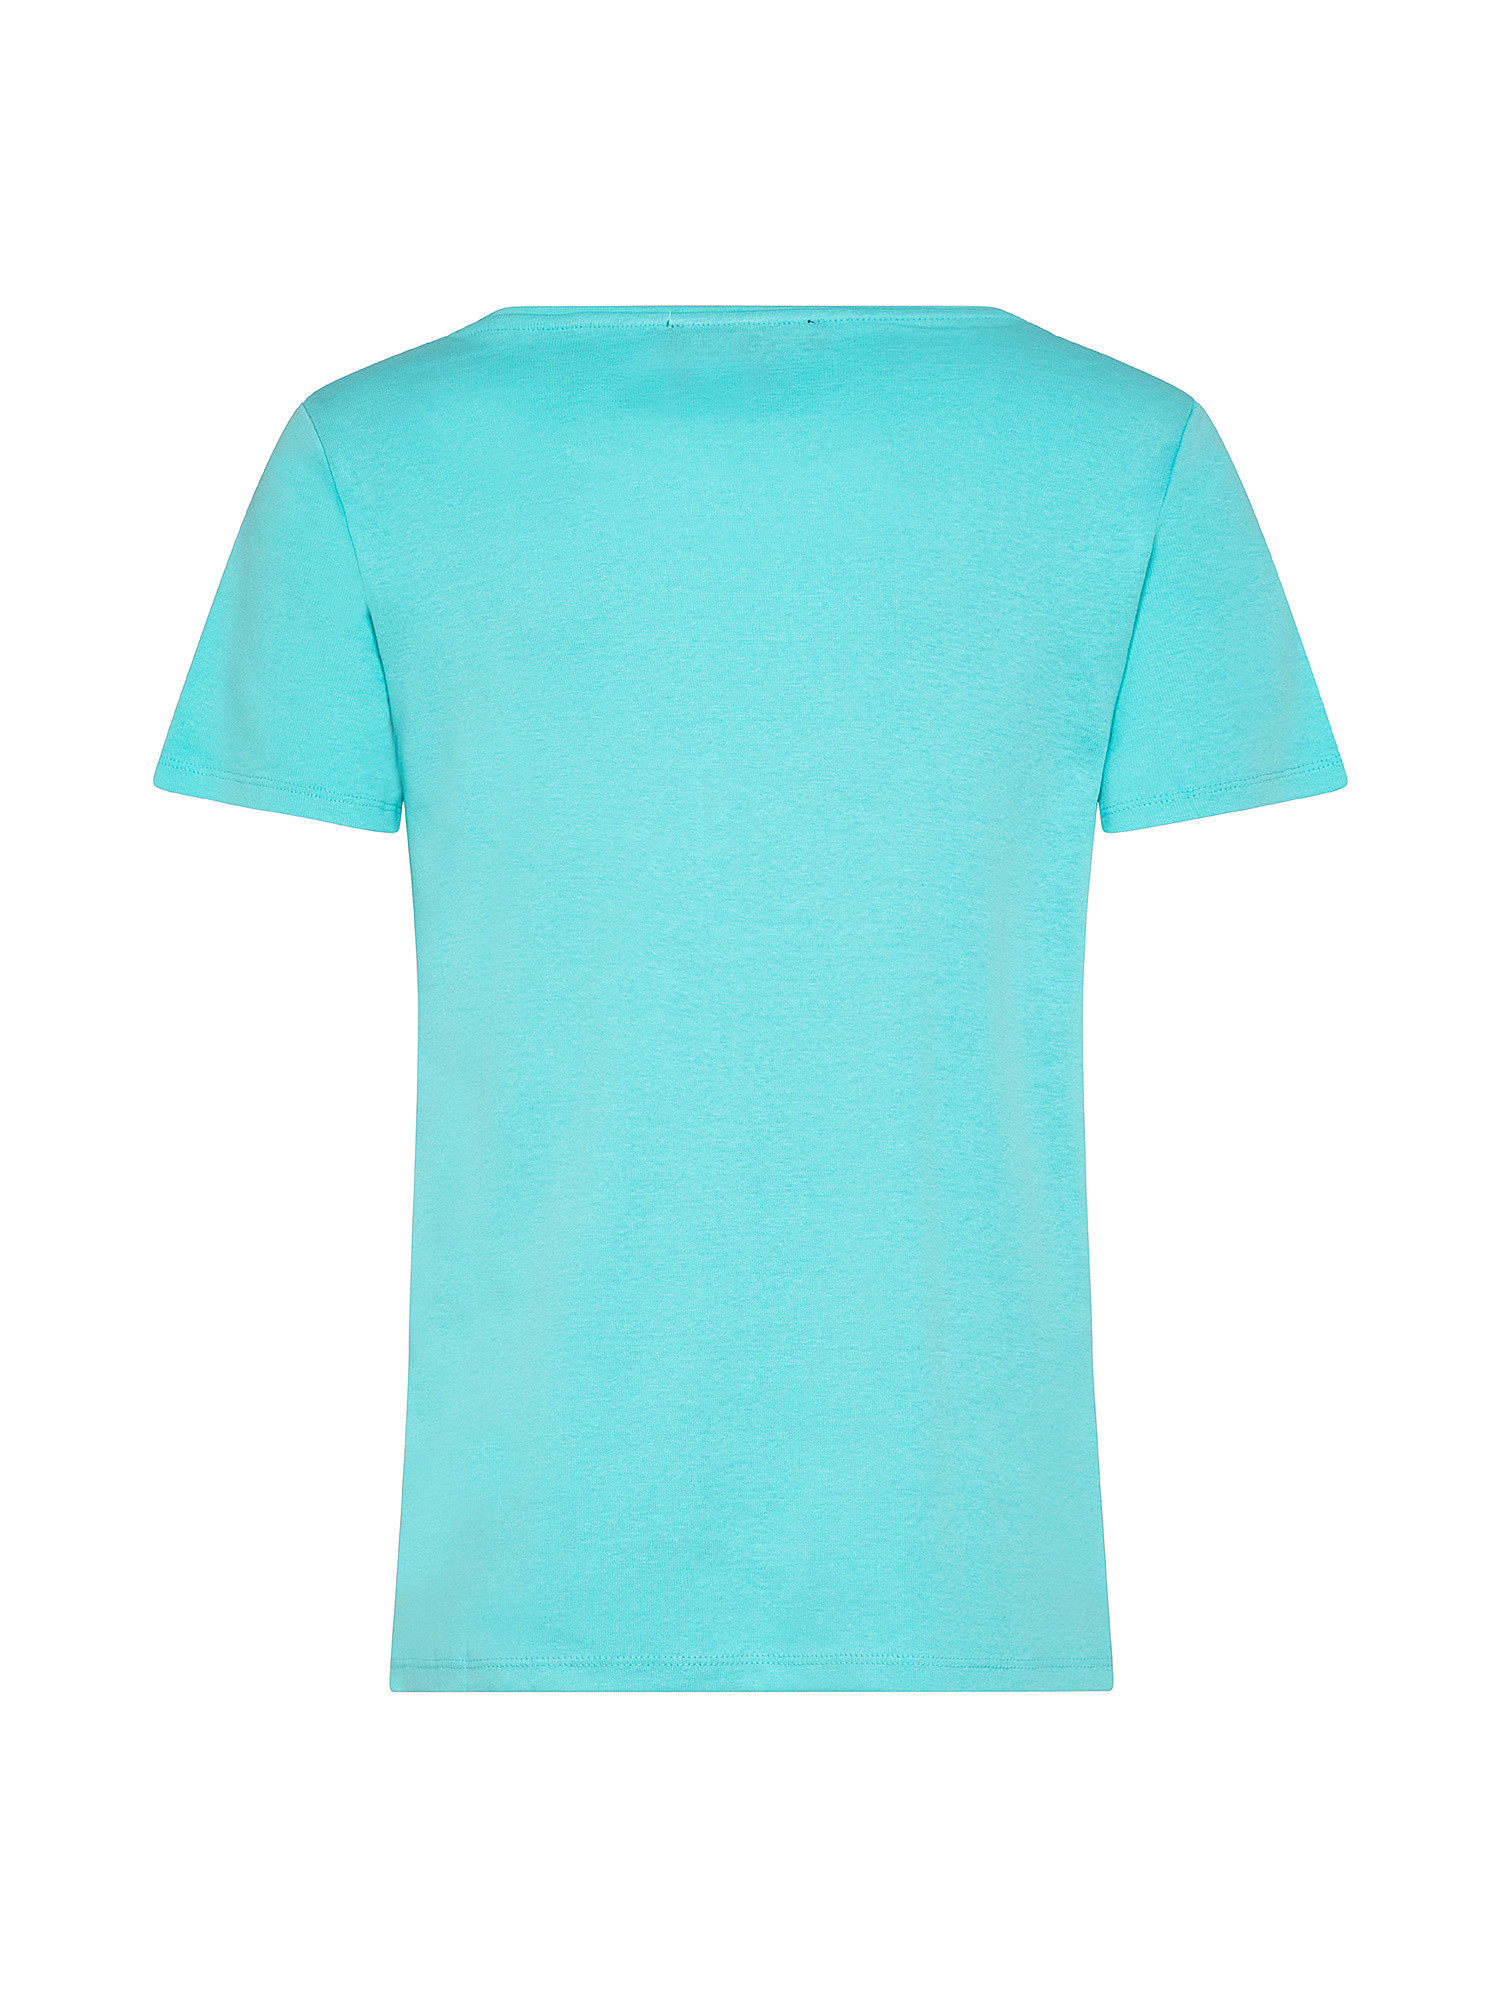 T-shirt with rhinestones, Light Blue, large image number 1